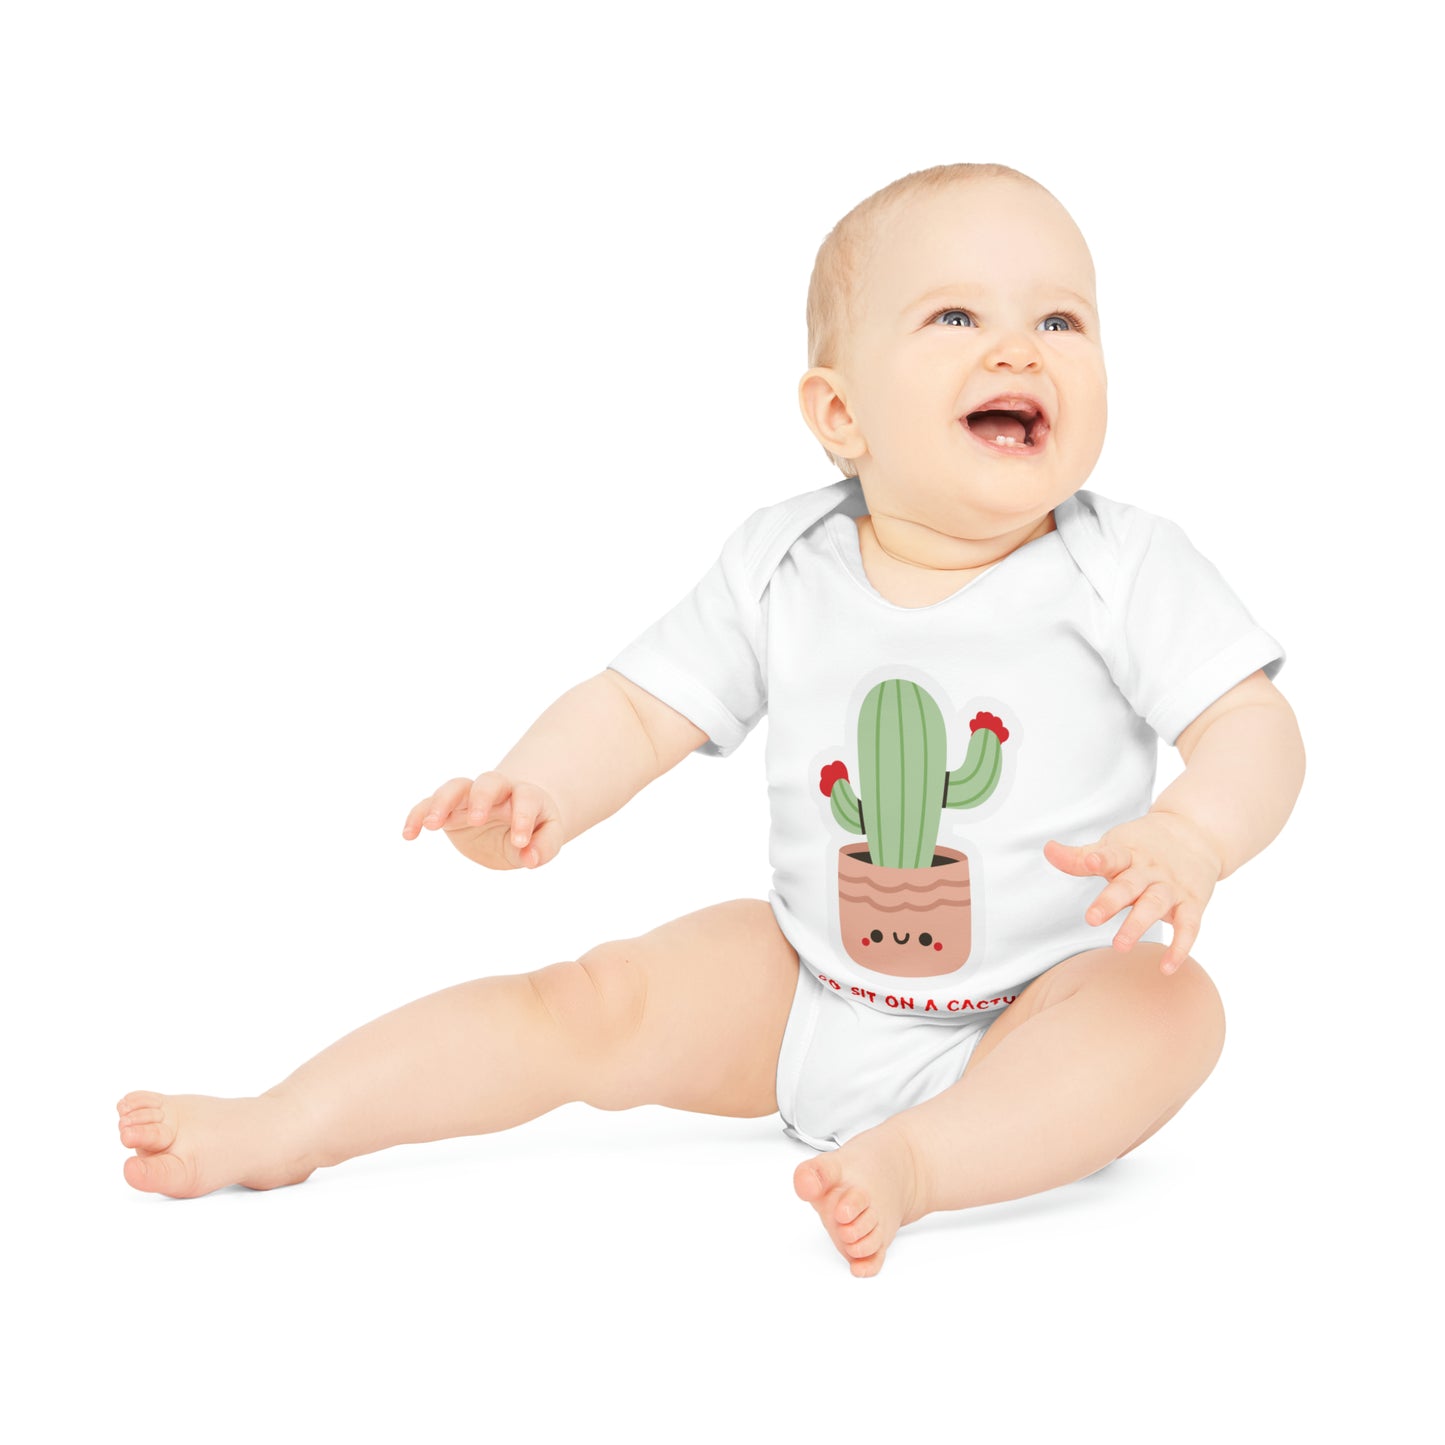 Funny Go Sit on a Cactus Baby Organic Short Sleeve Bodysuit